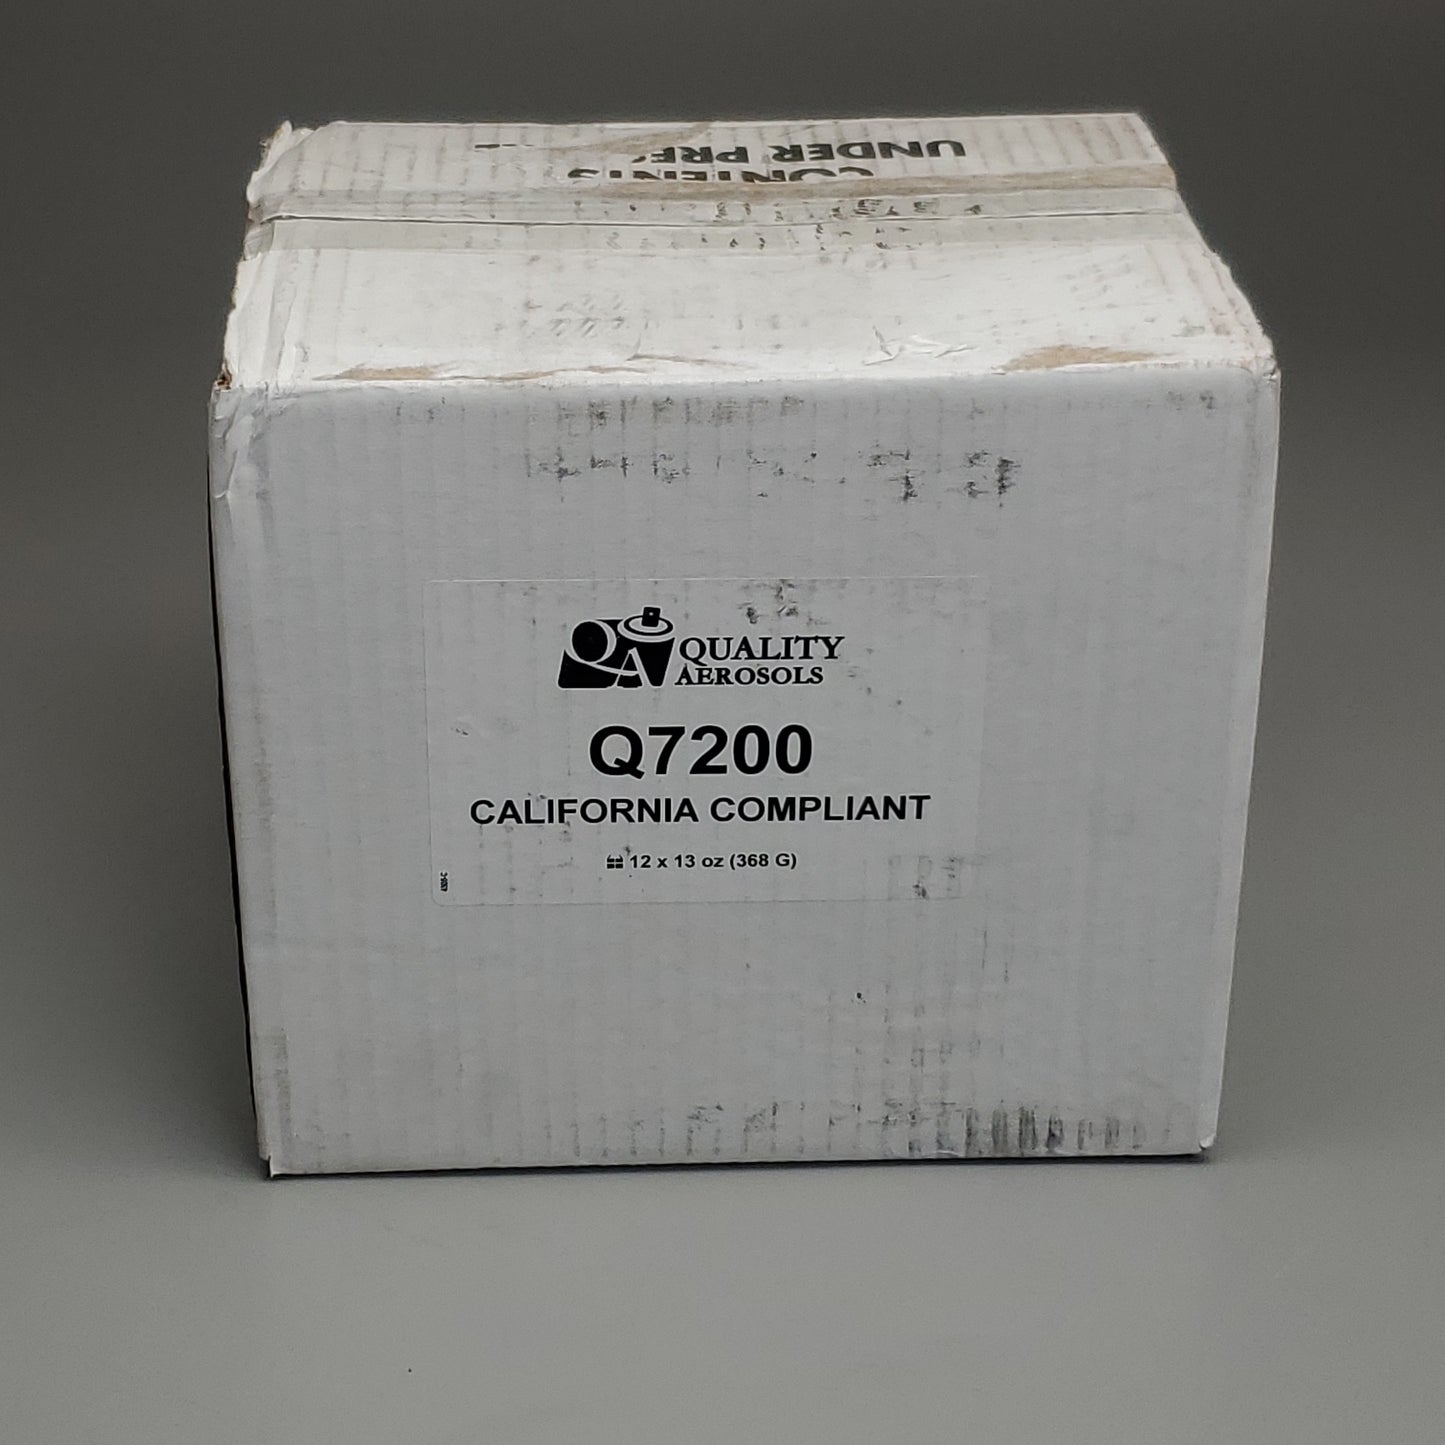 QUALITY AEROSOLS 12 PK Expanded Polystyrene Special Purpose Adhesive 13 oz Q7200 (New)